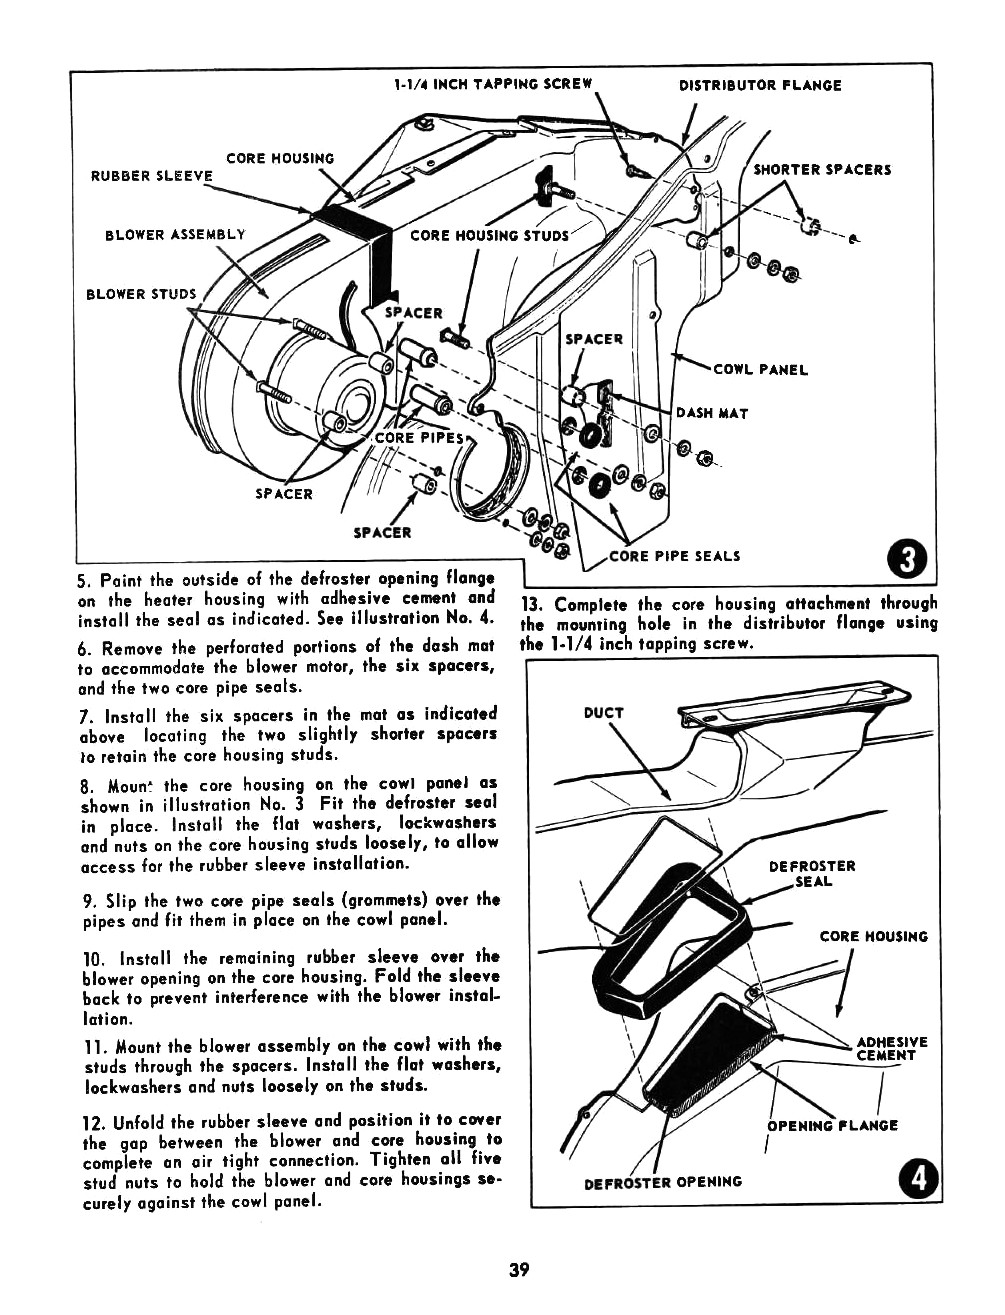 1955_Chevrolet_Acc_Manual-39